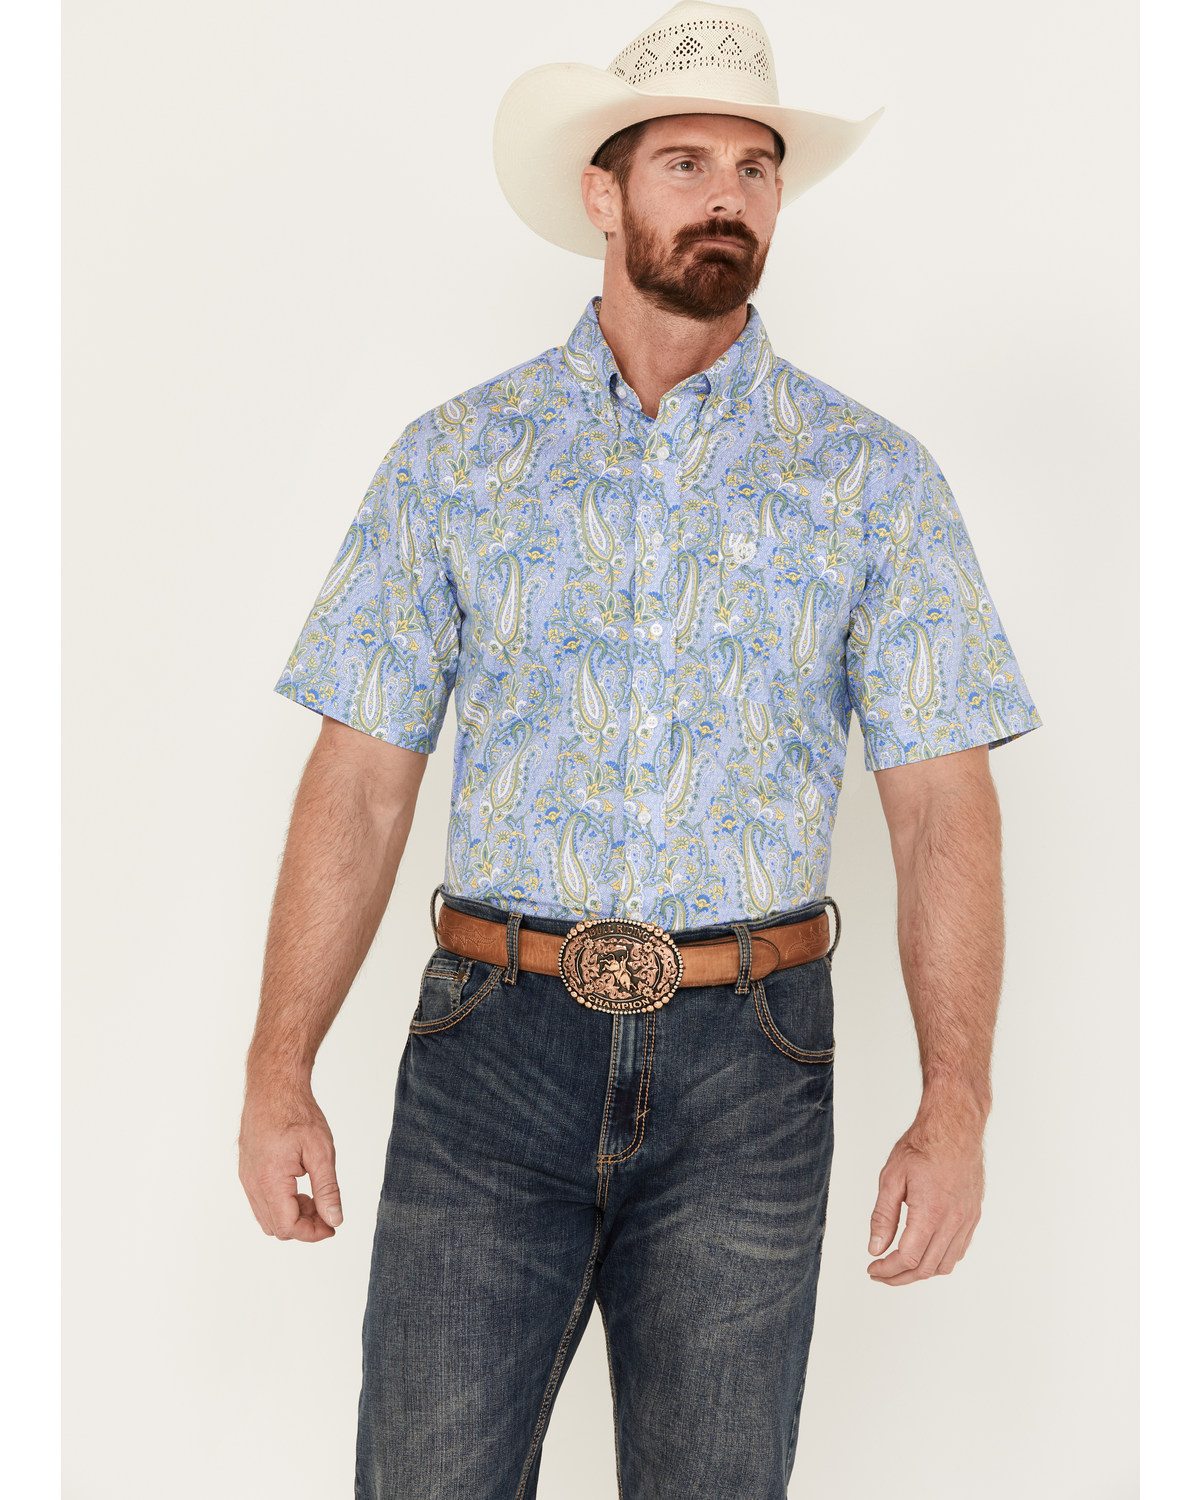 Panhandle Select Men's Paisley Print Short Sleeve Button-Down Western Shirt